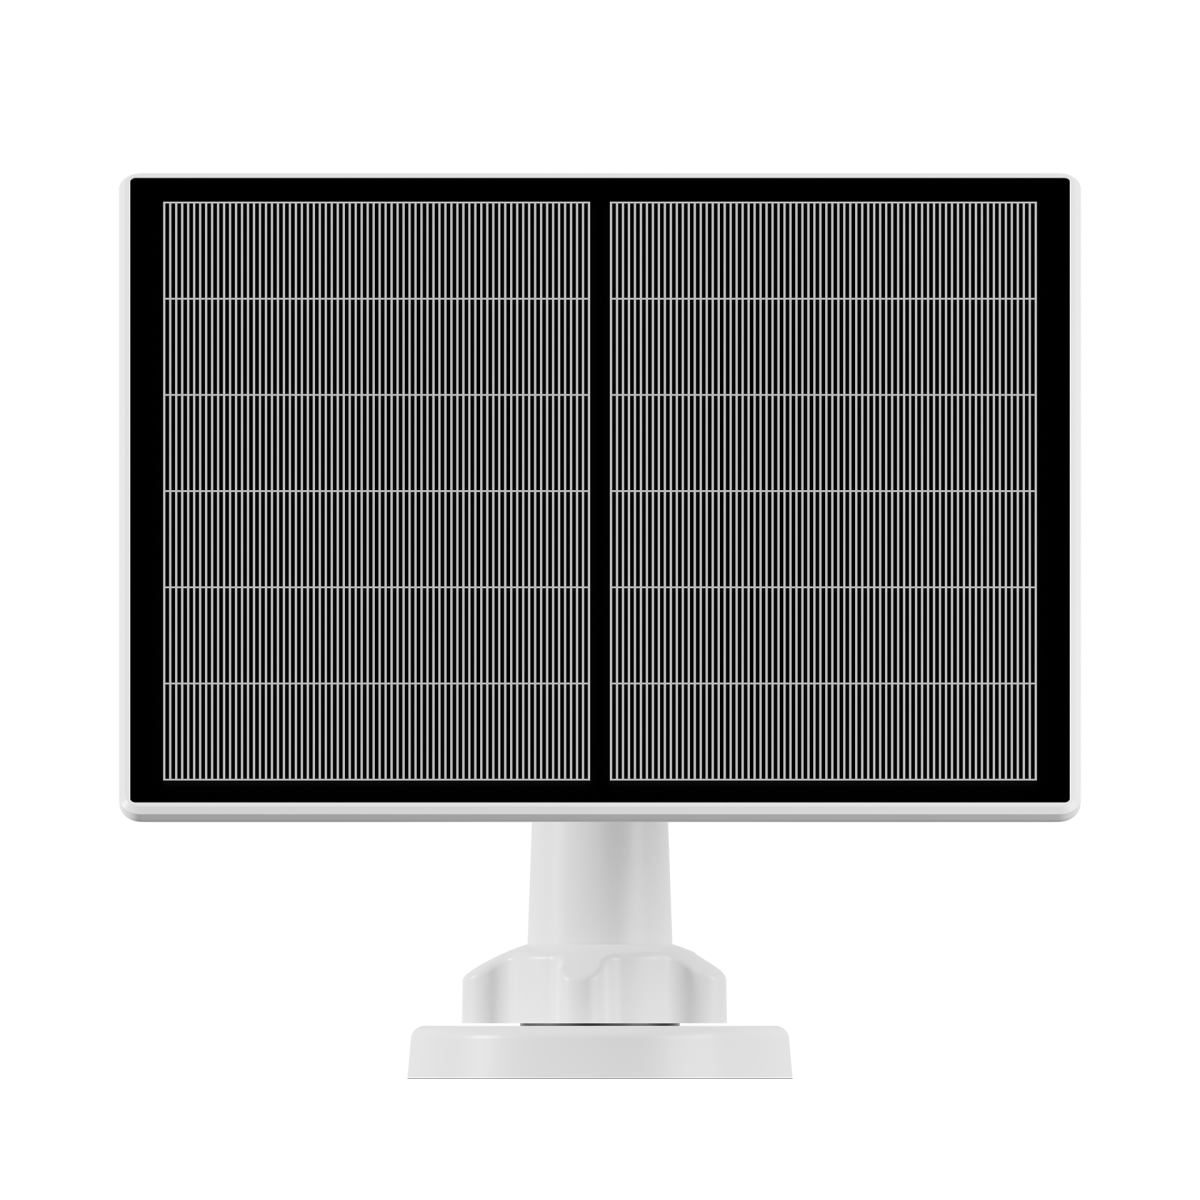 Solárny panel TESLA Solar Panel 5W